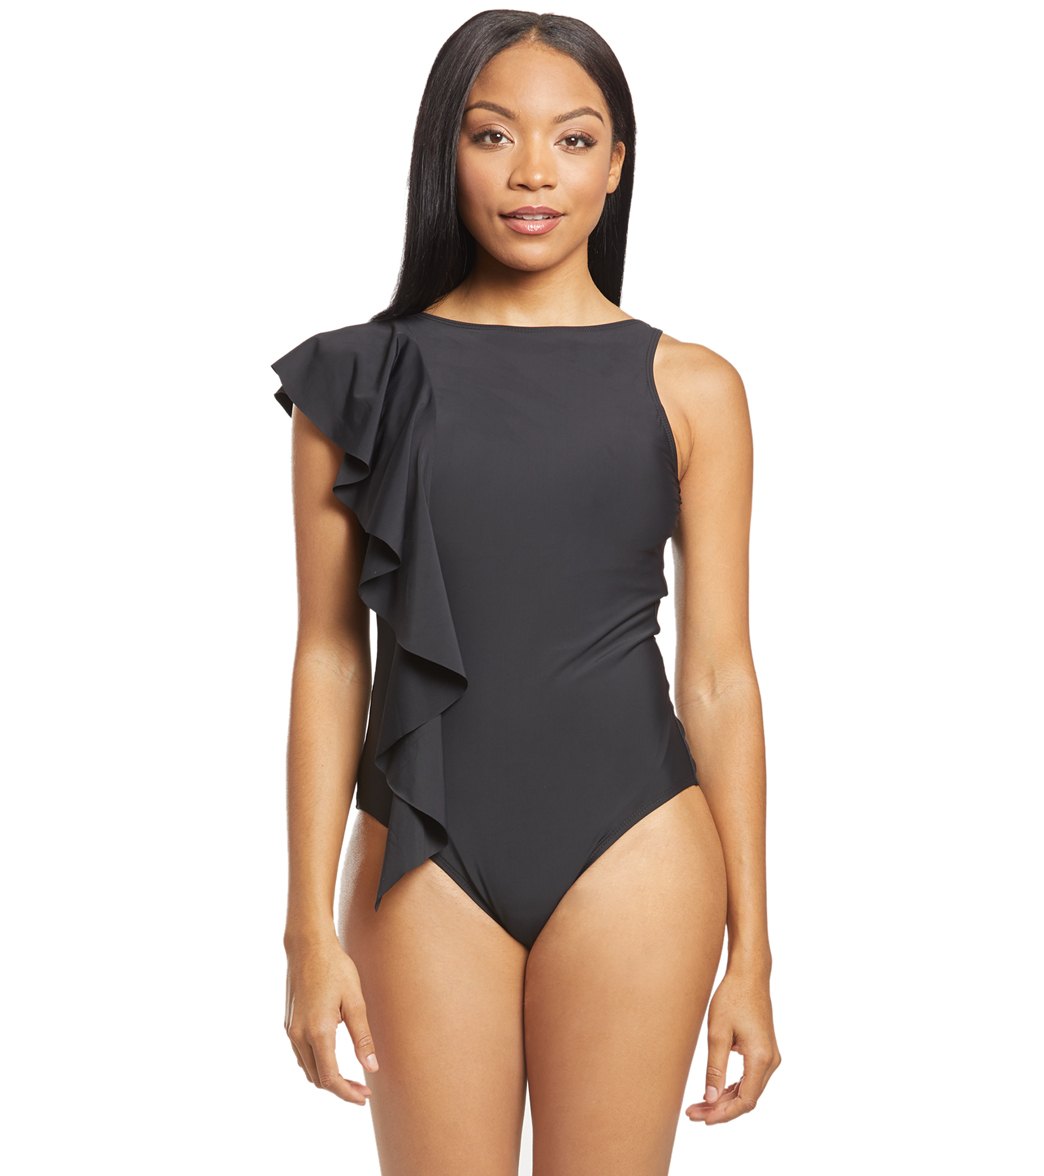 Athena Samba Solids Ruffle One Piece Swimsuit - Black 6 - Swimoutlet.com